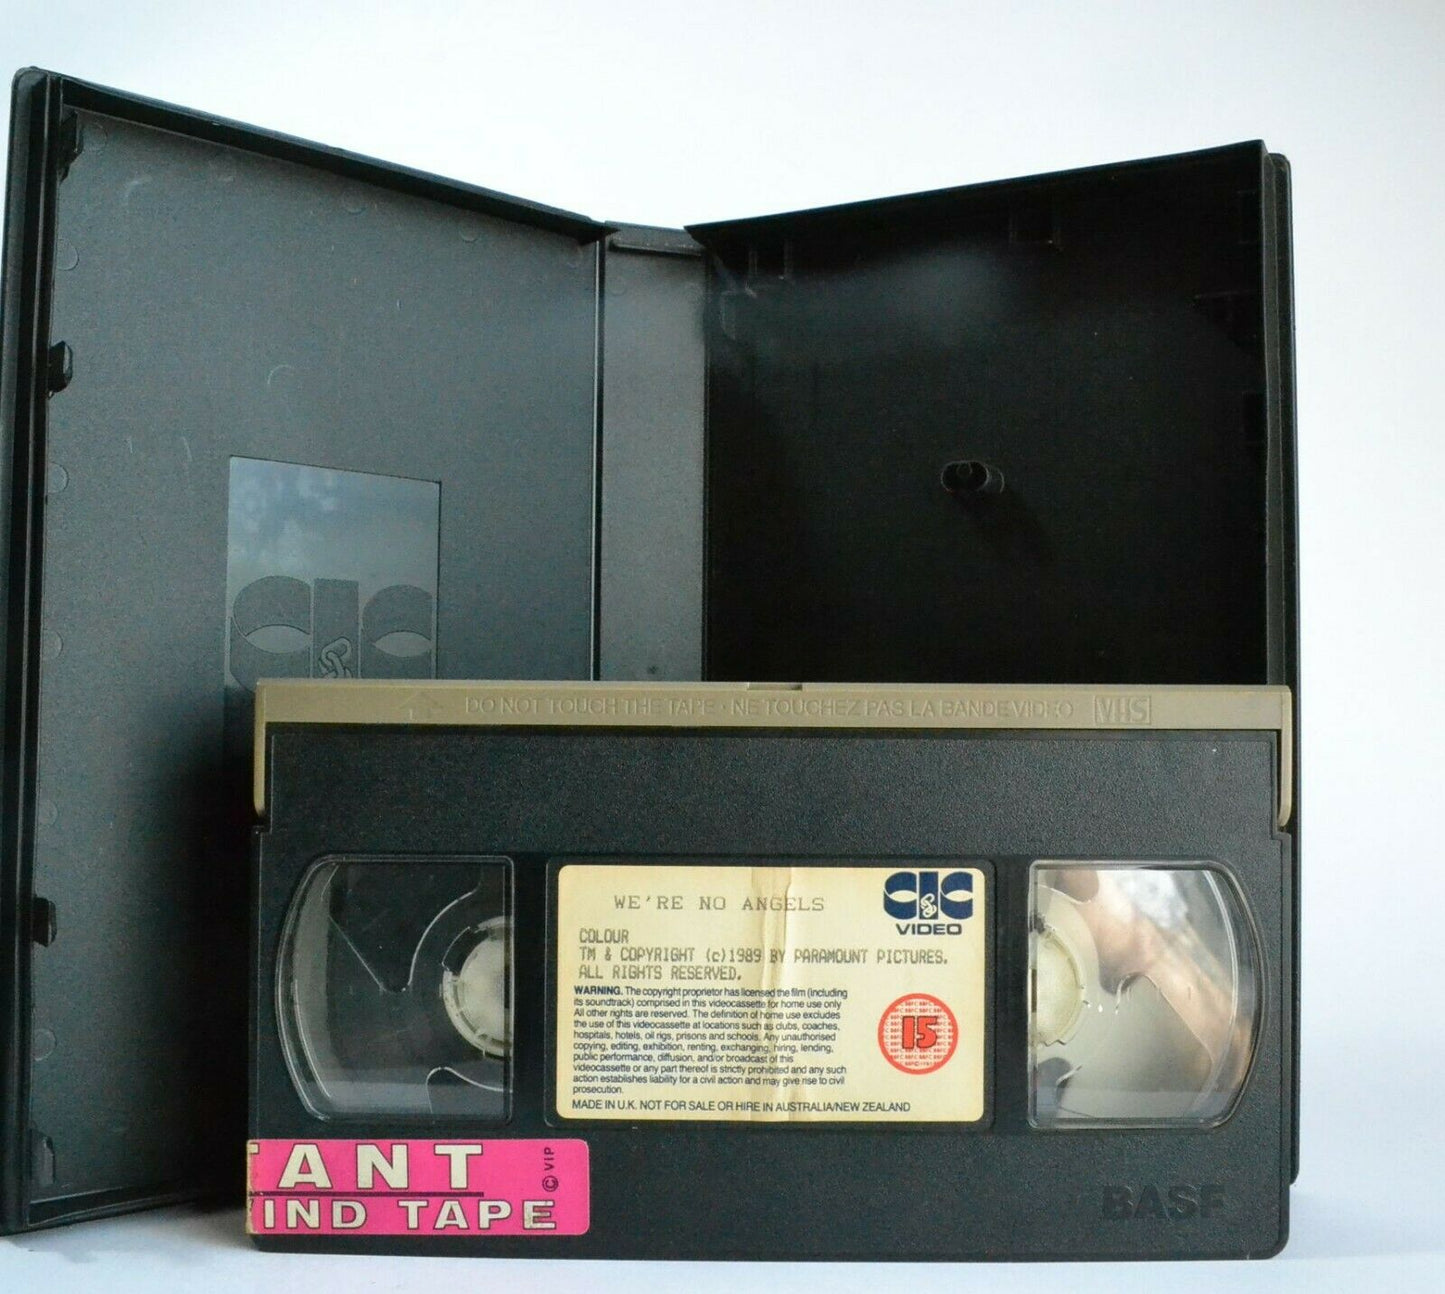 We're No Angels: CIC Video (1989) - Comedy - Large Box - R.De Niro/S.Penn - VHS-